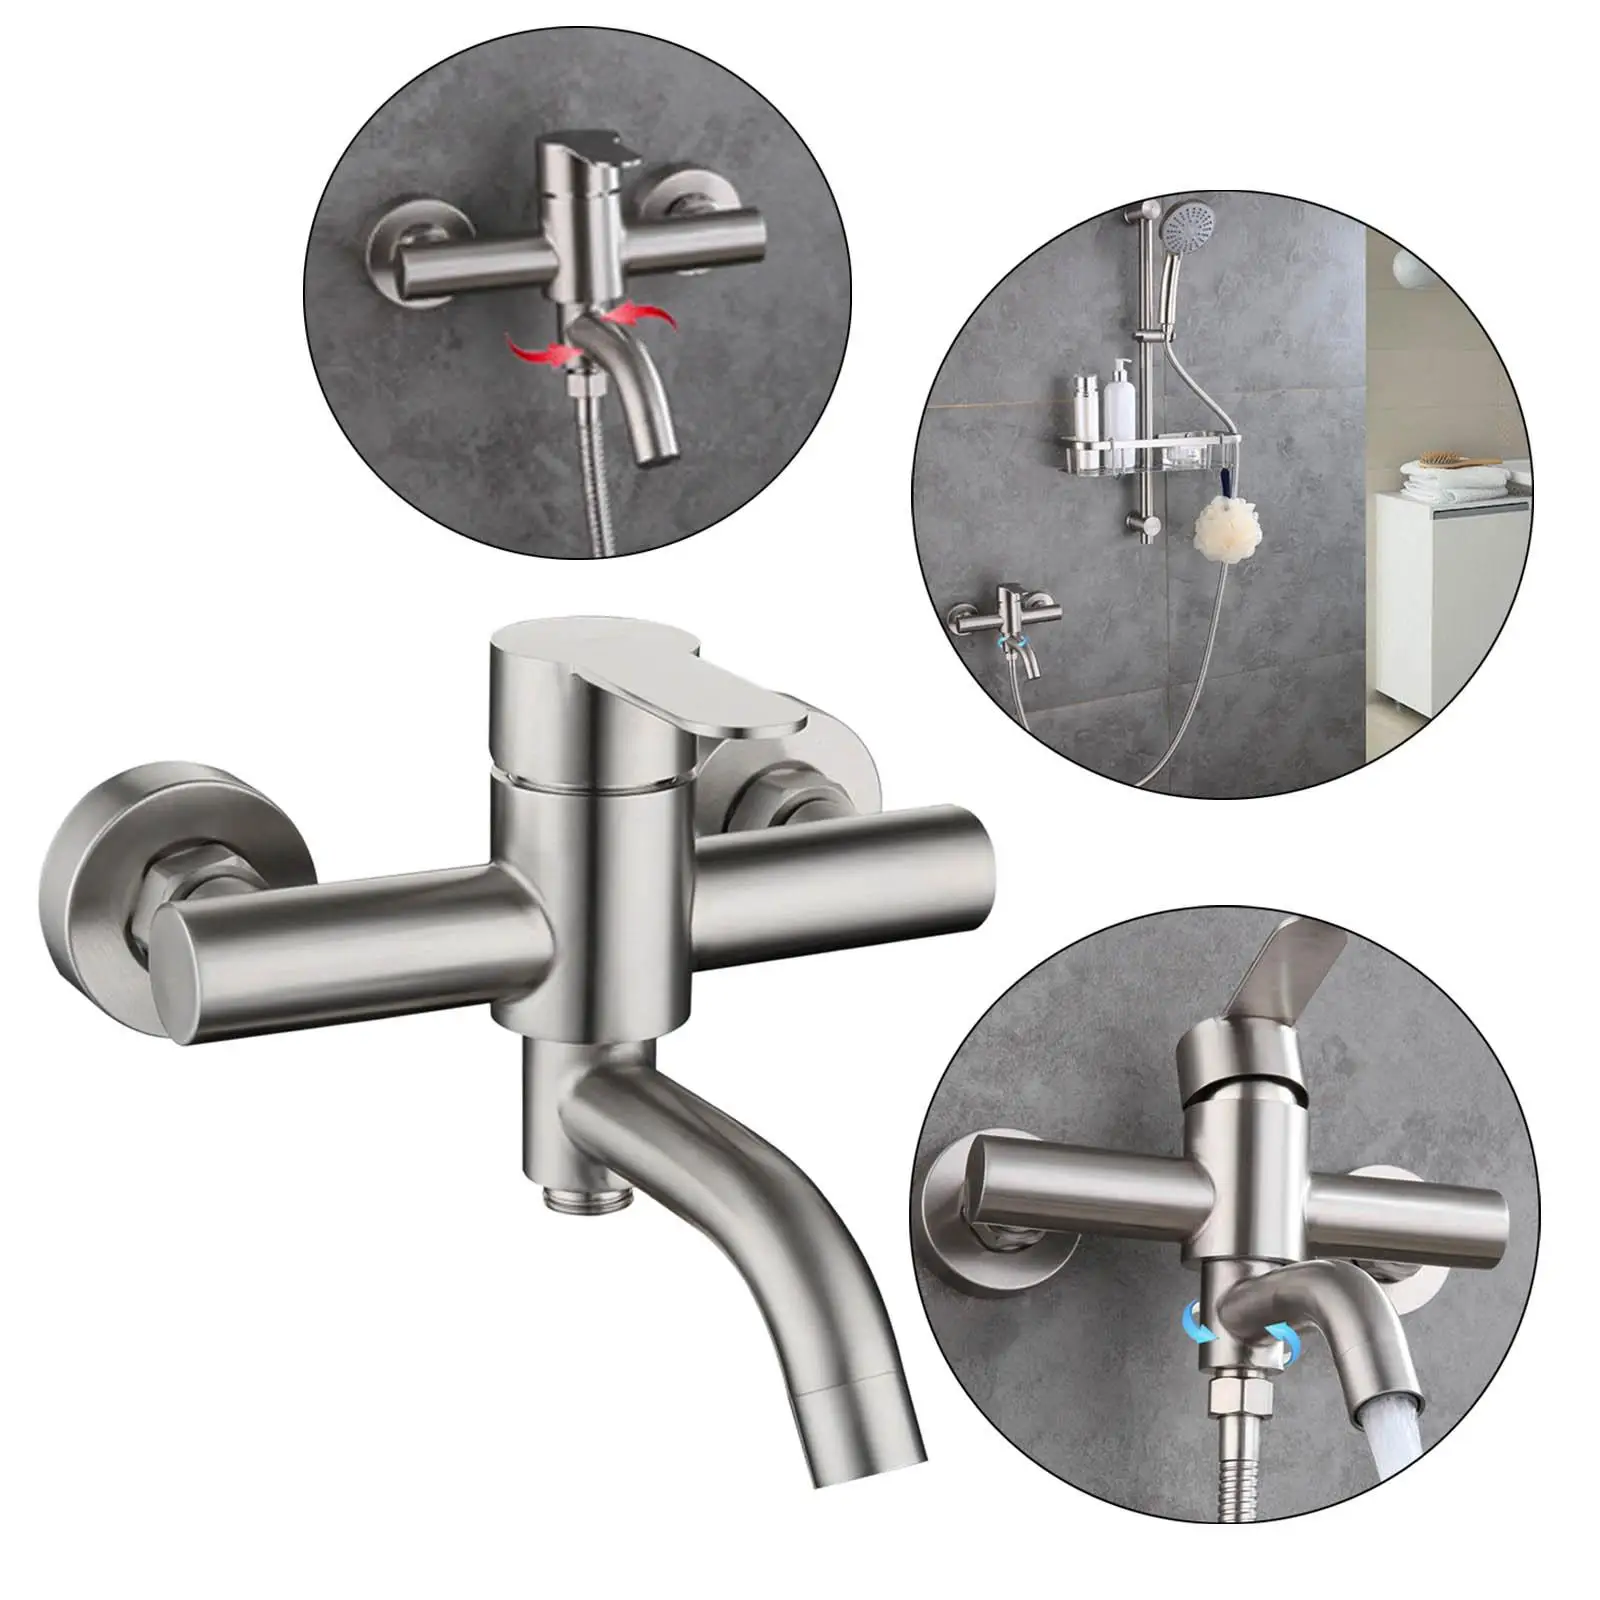 Bathroom Shower Mixer Faucet Bathroom Accessories Universal Singlem Handle Install Range 13-17cm Bath Tub Mixing